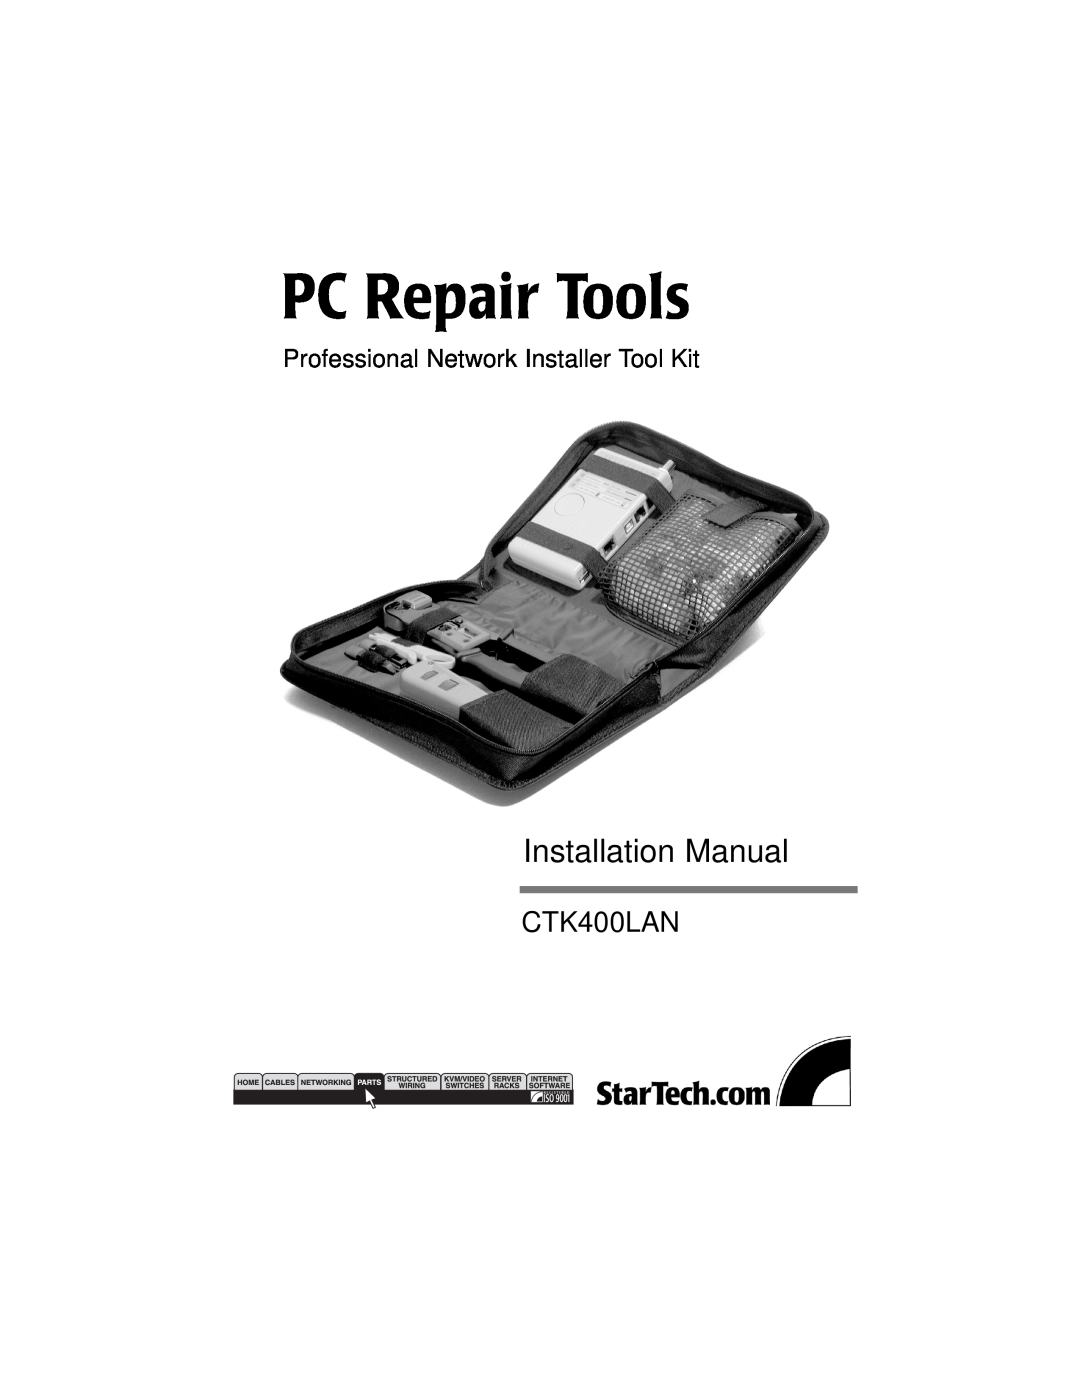 StarTech.com CTK400LAN installation manual PC Repair Tools, Installation Manual, Professional Network Installer Tool Kit 